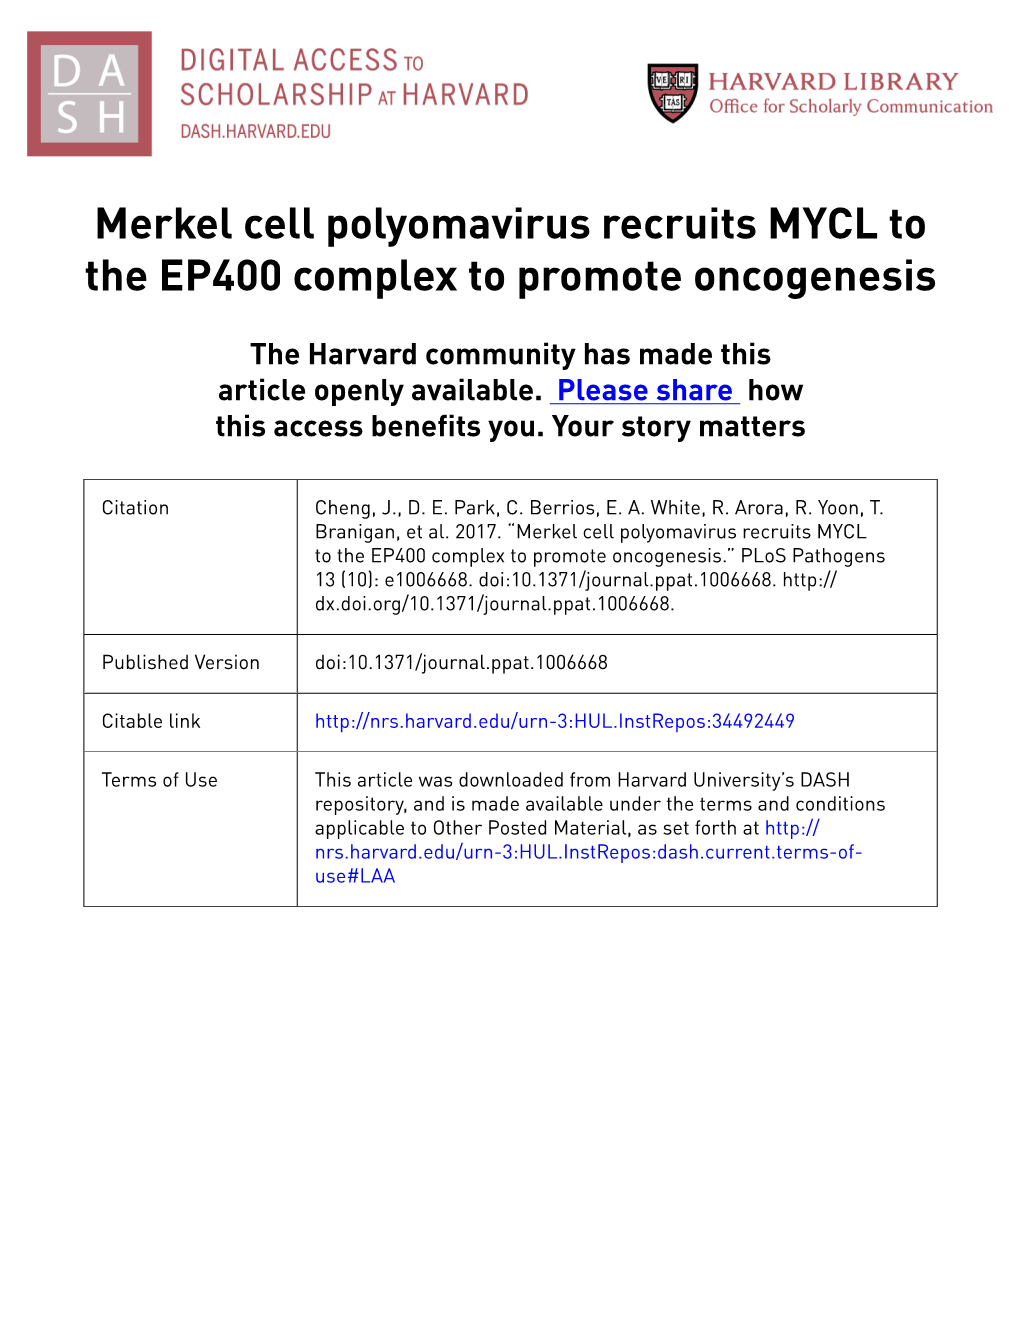 Merkel Cell Polyomavirus Recruits MYCL to the EP400 Complex to Promote Oncogenesis